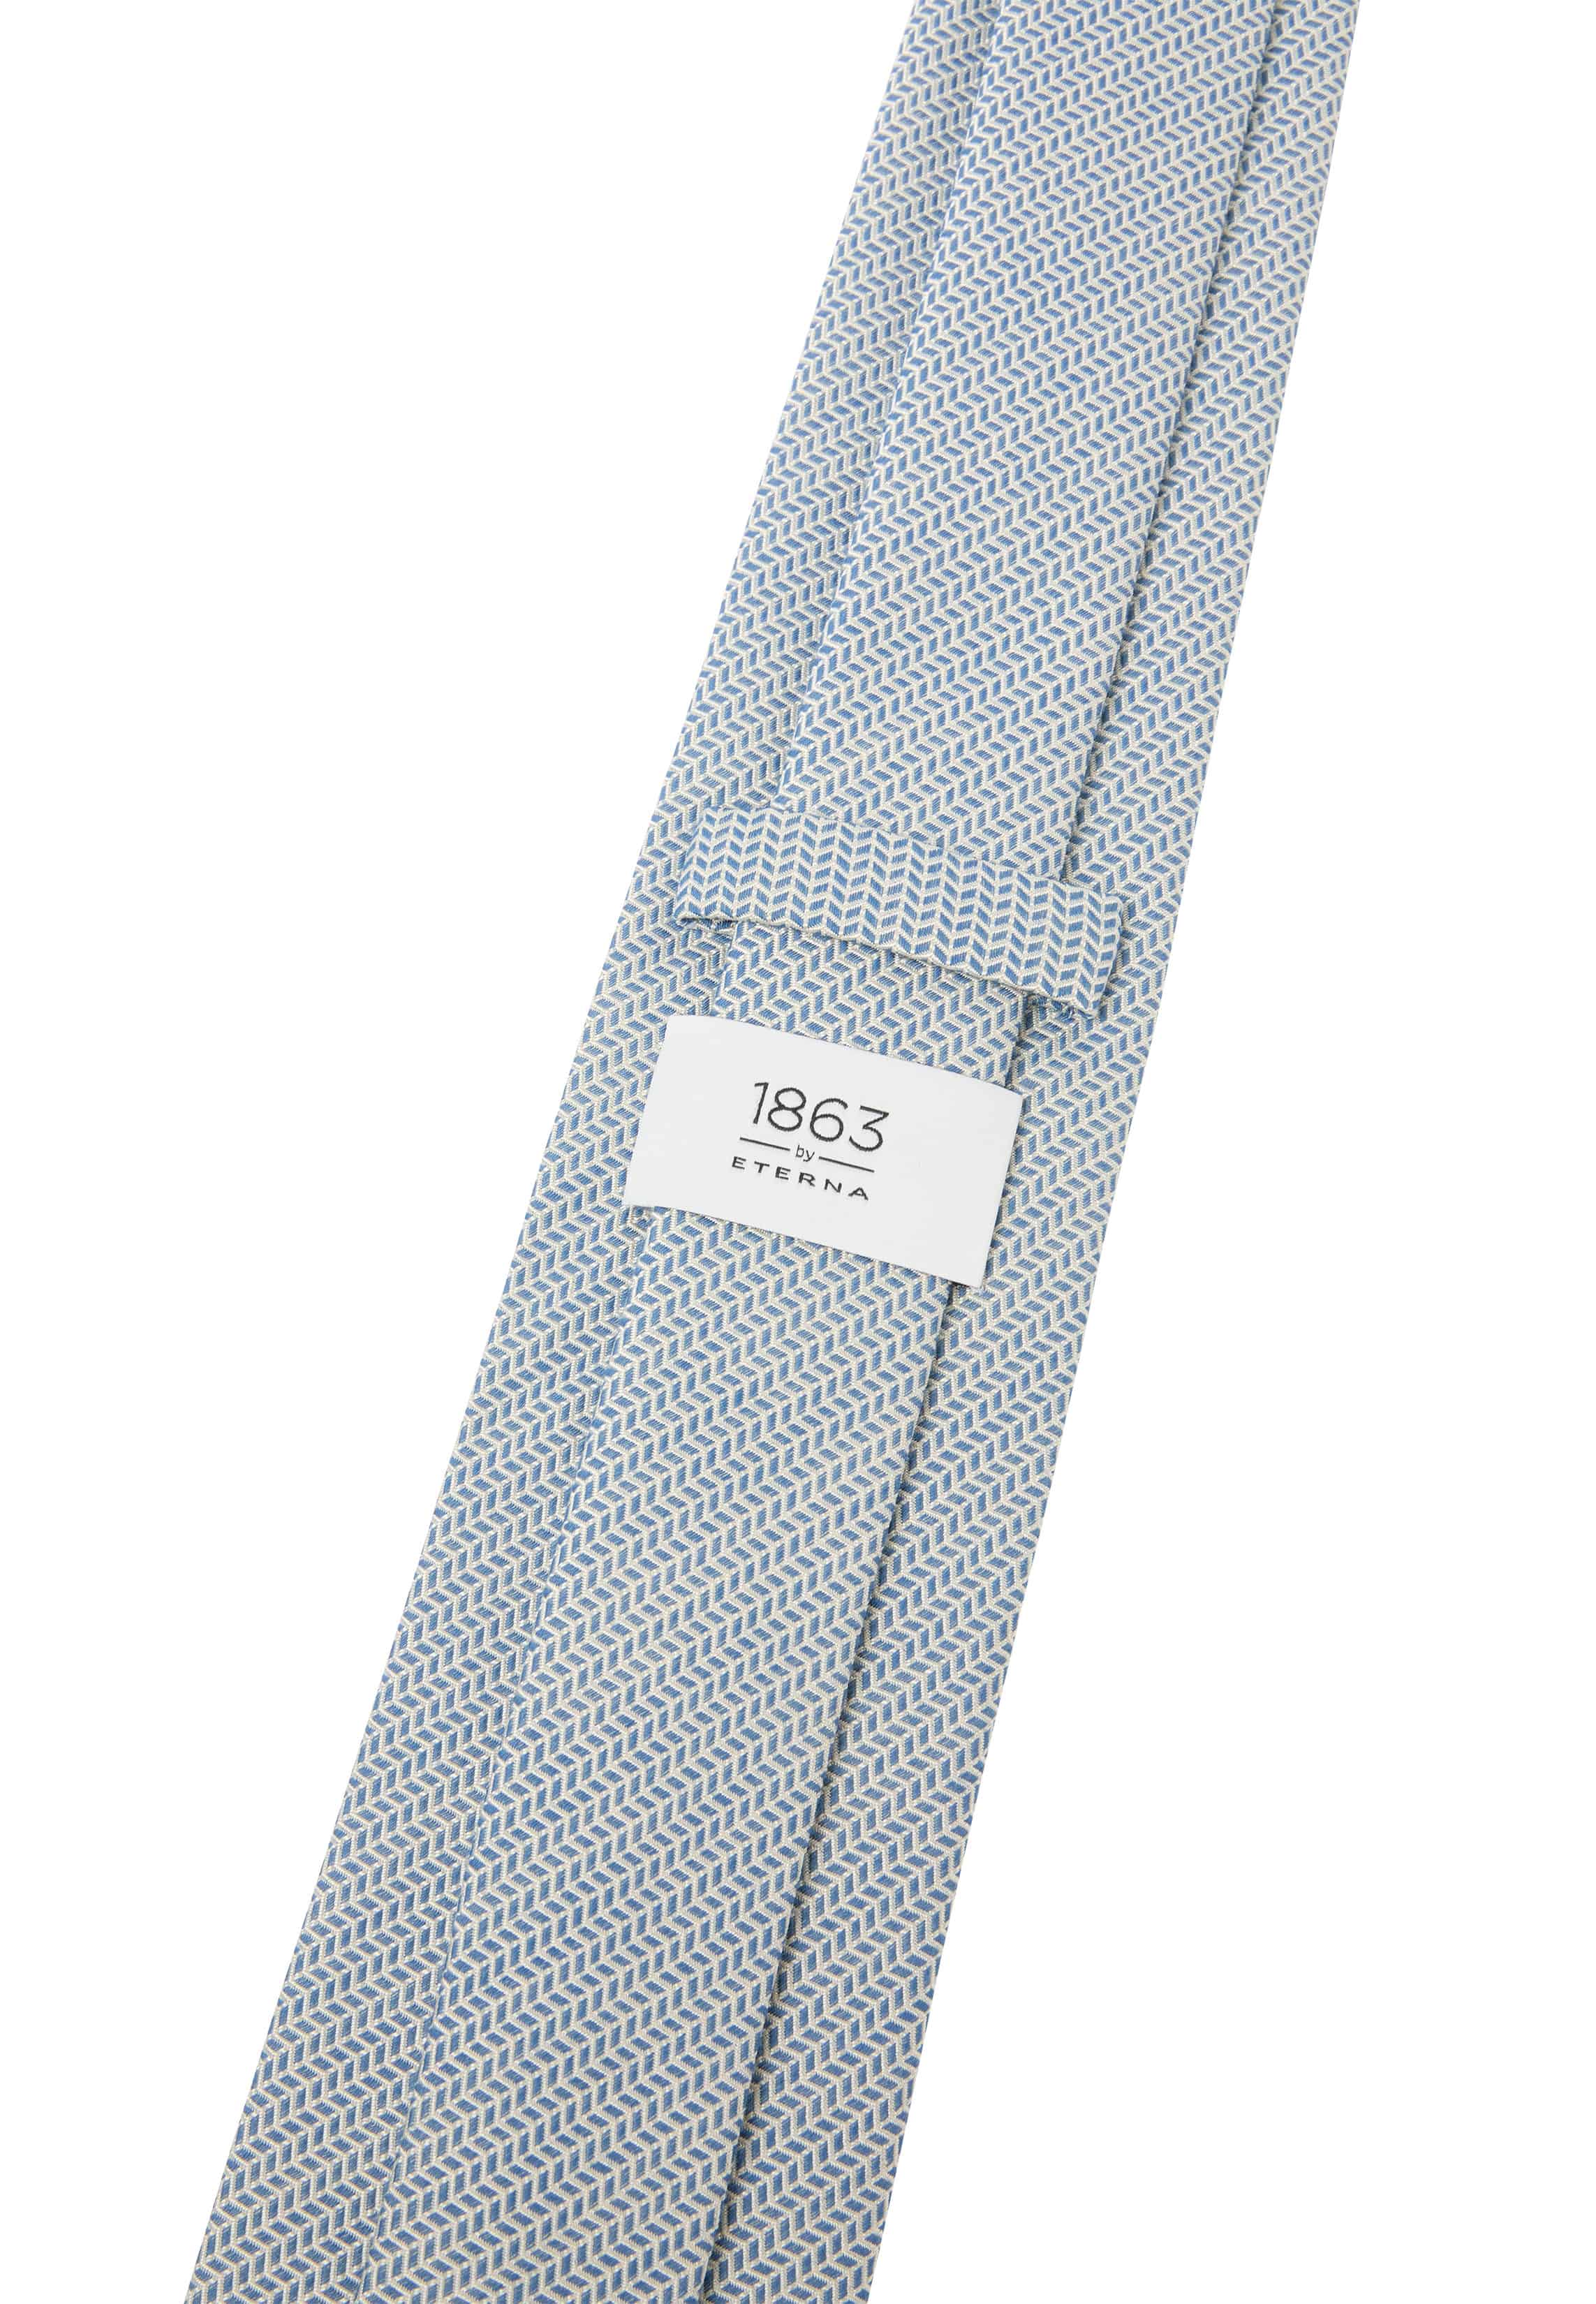 Cravate bleu moyen estampé